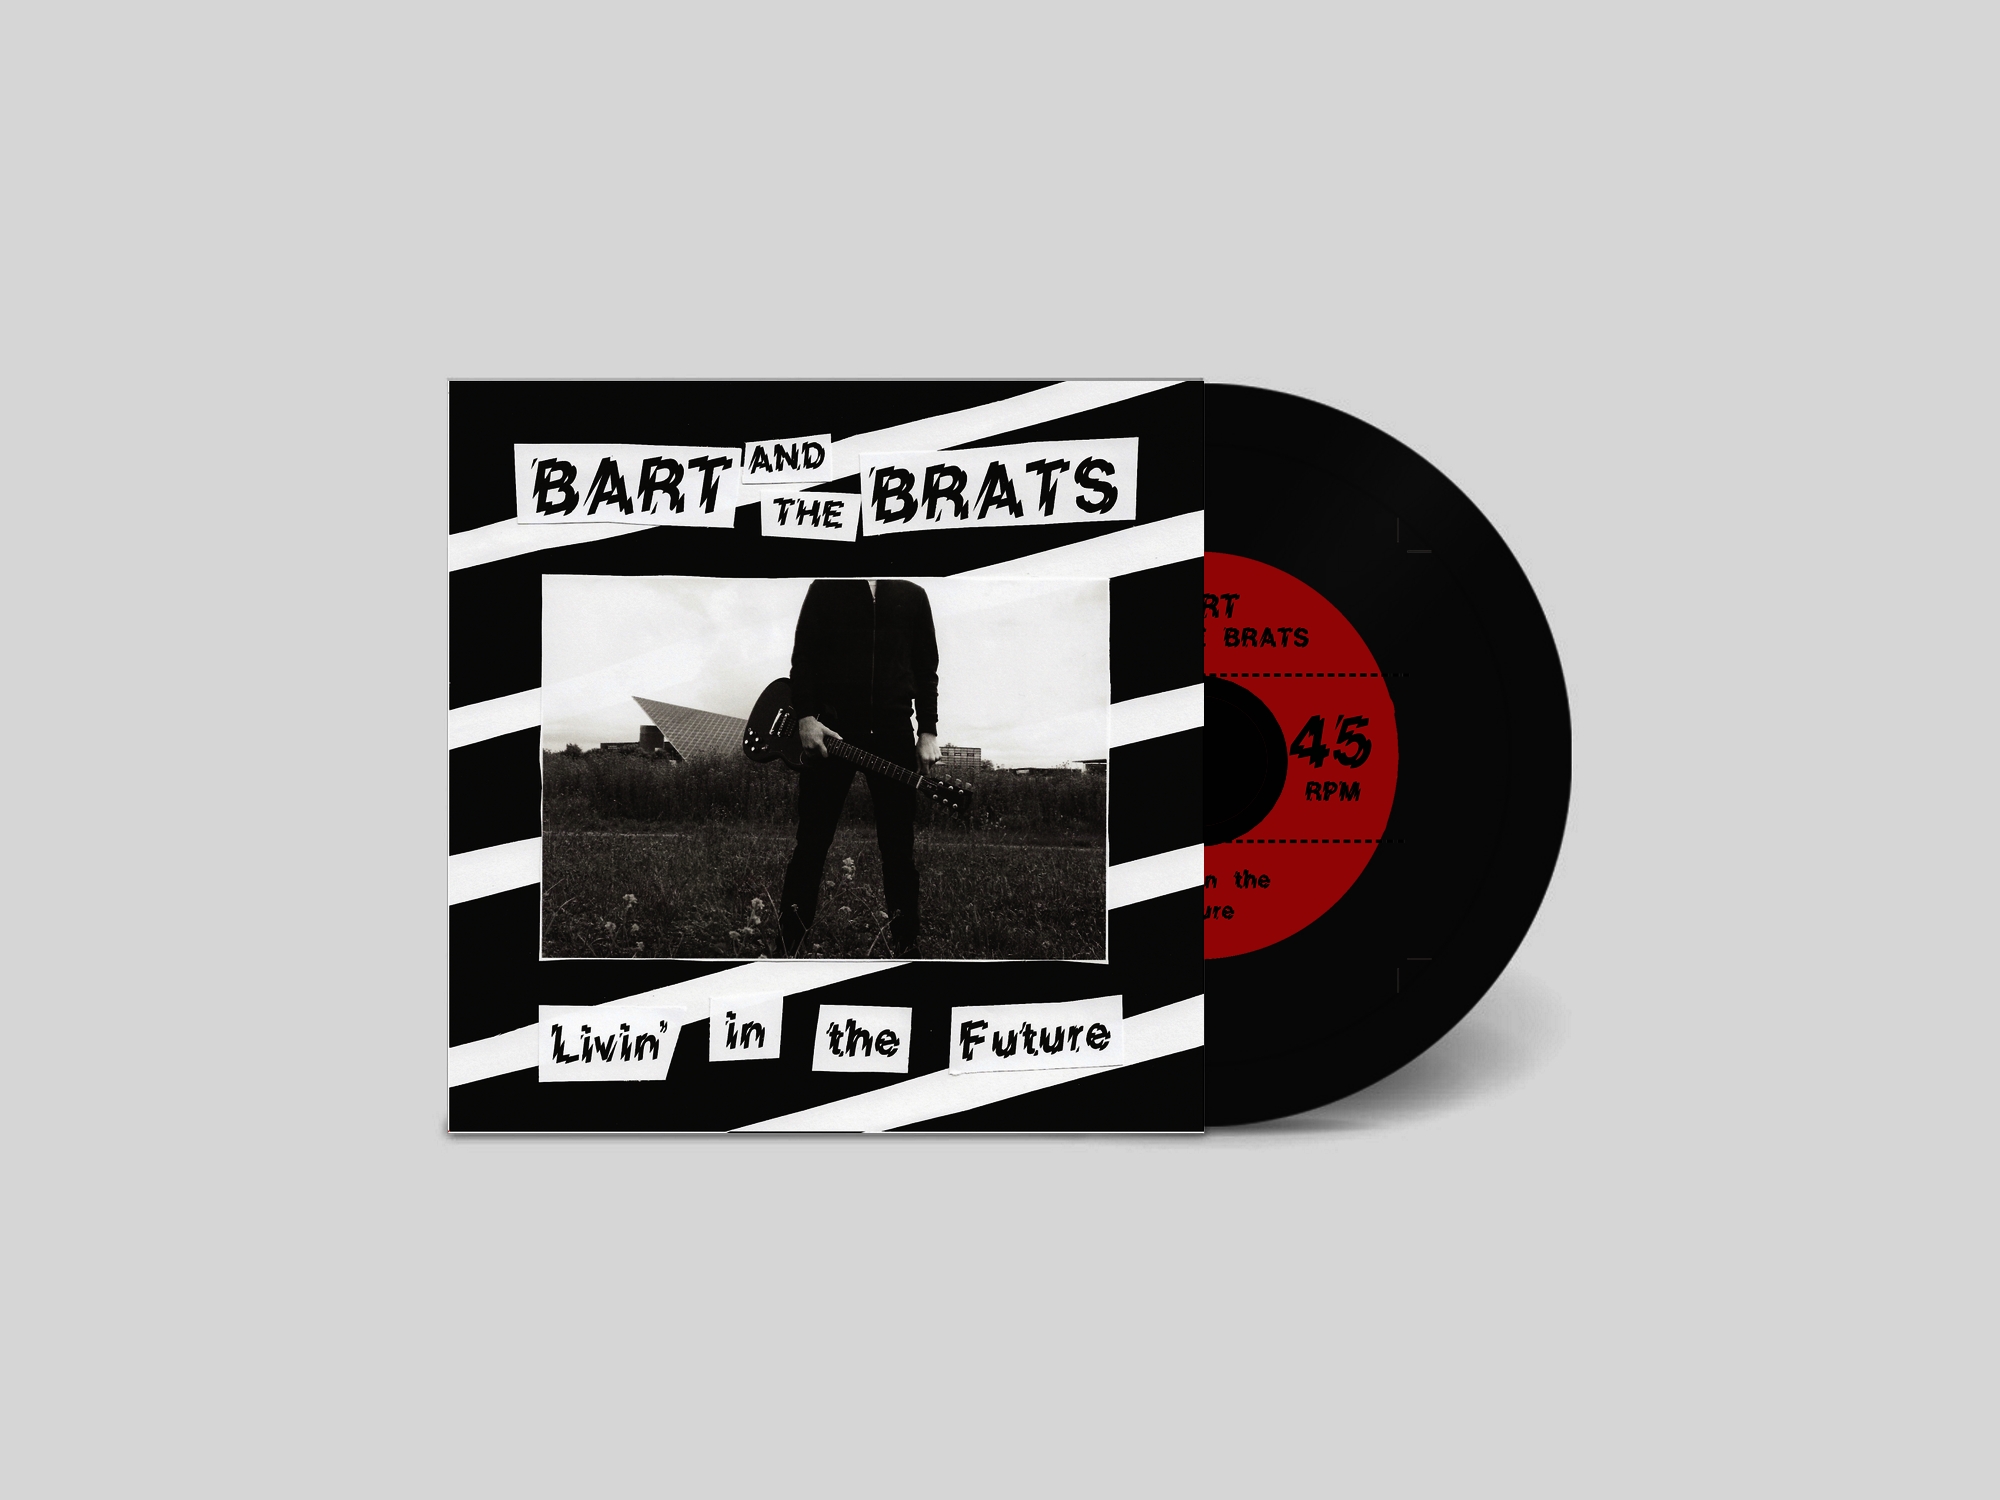 1634304191-Bart-and-the-brats-disco-negrojpg.jpg